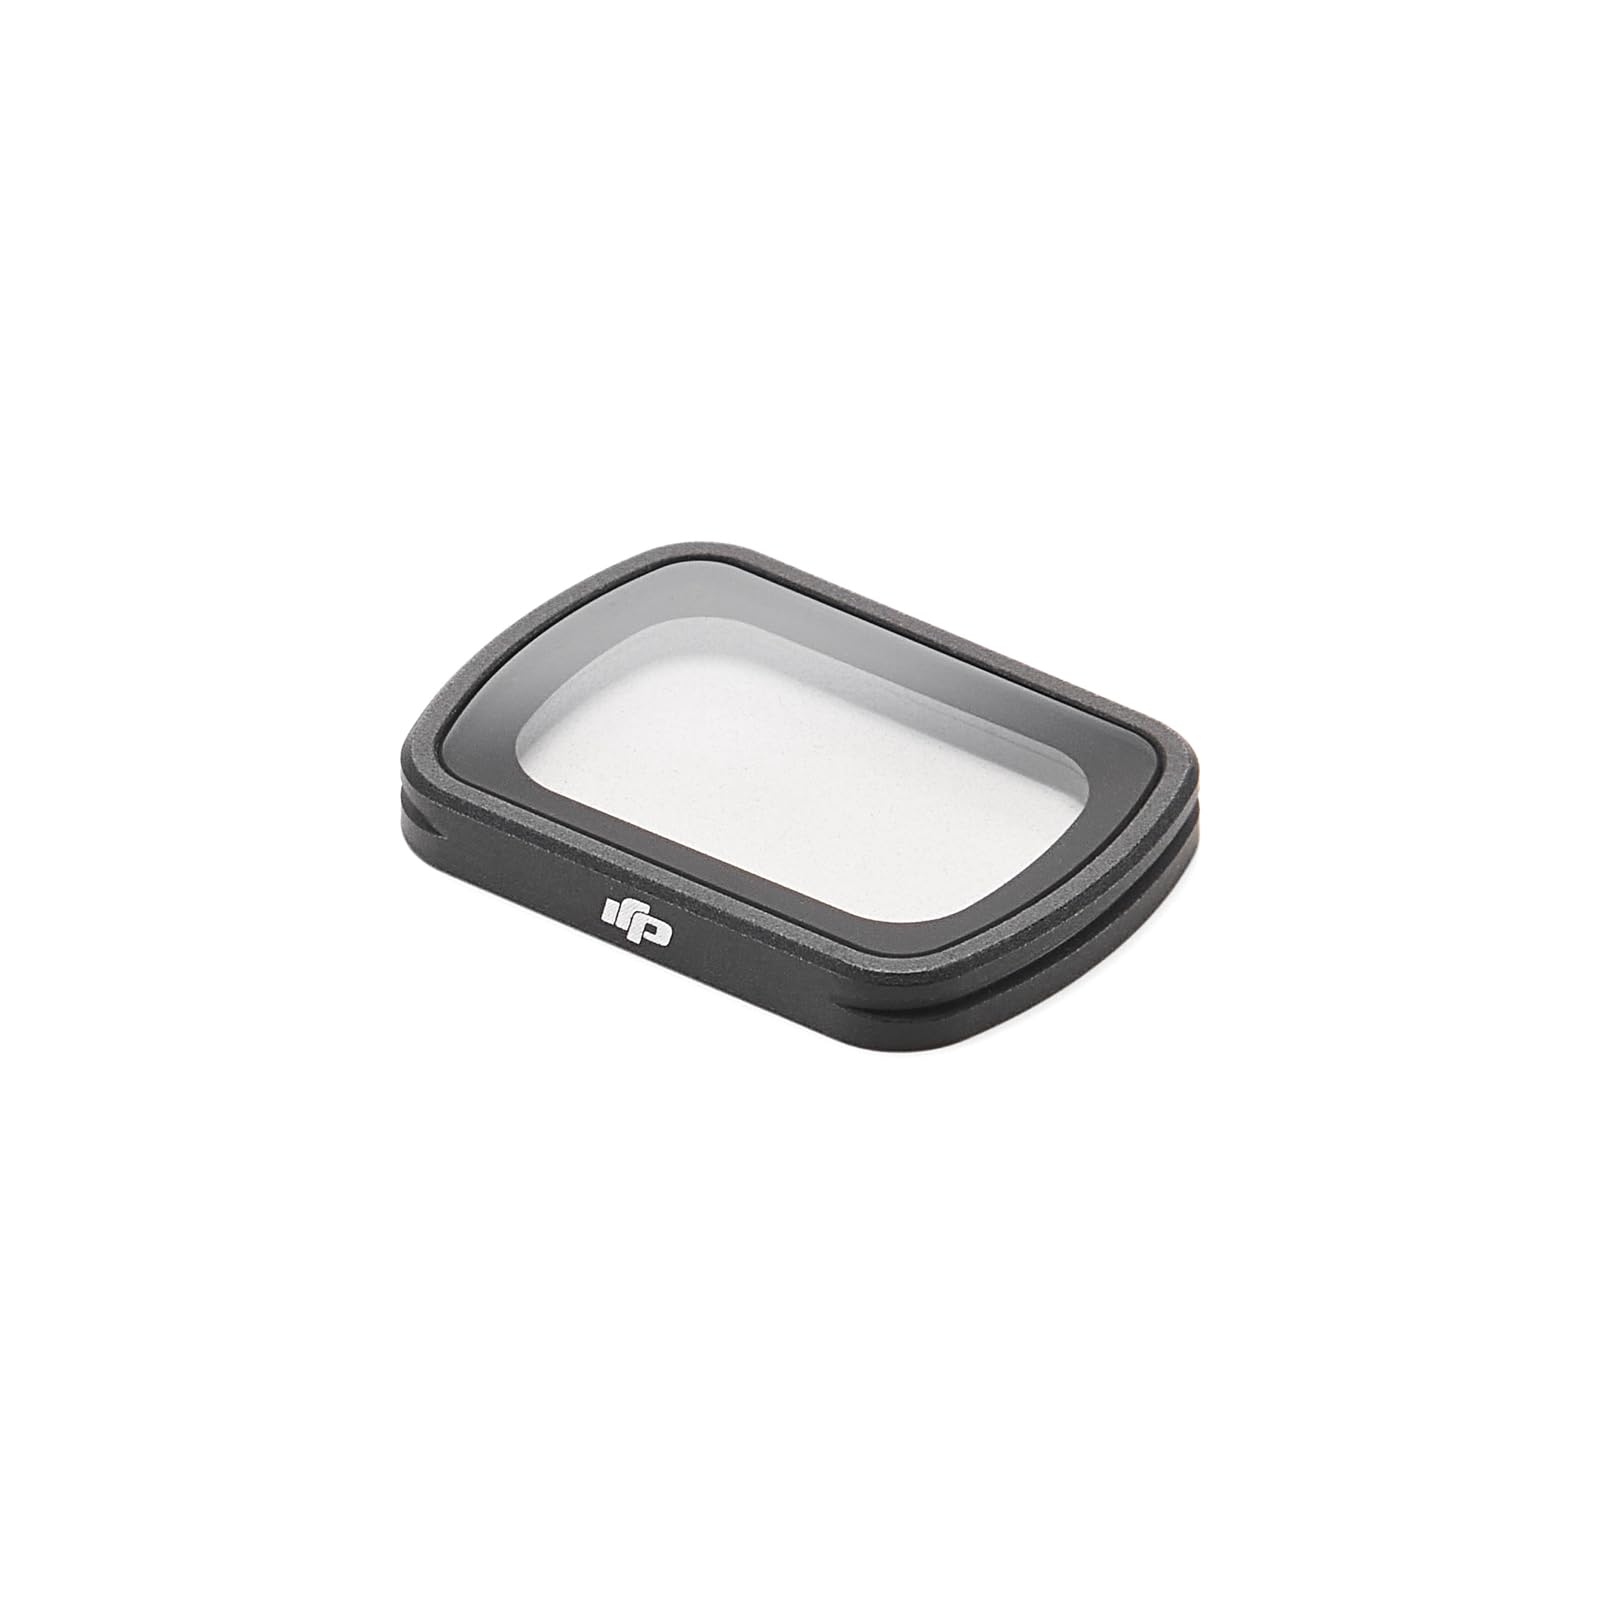 Osmo Pocket 3 Black Mist Filter, Compatibility: Osmo Pocket 3